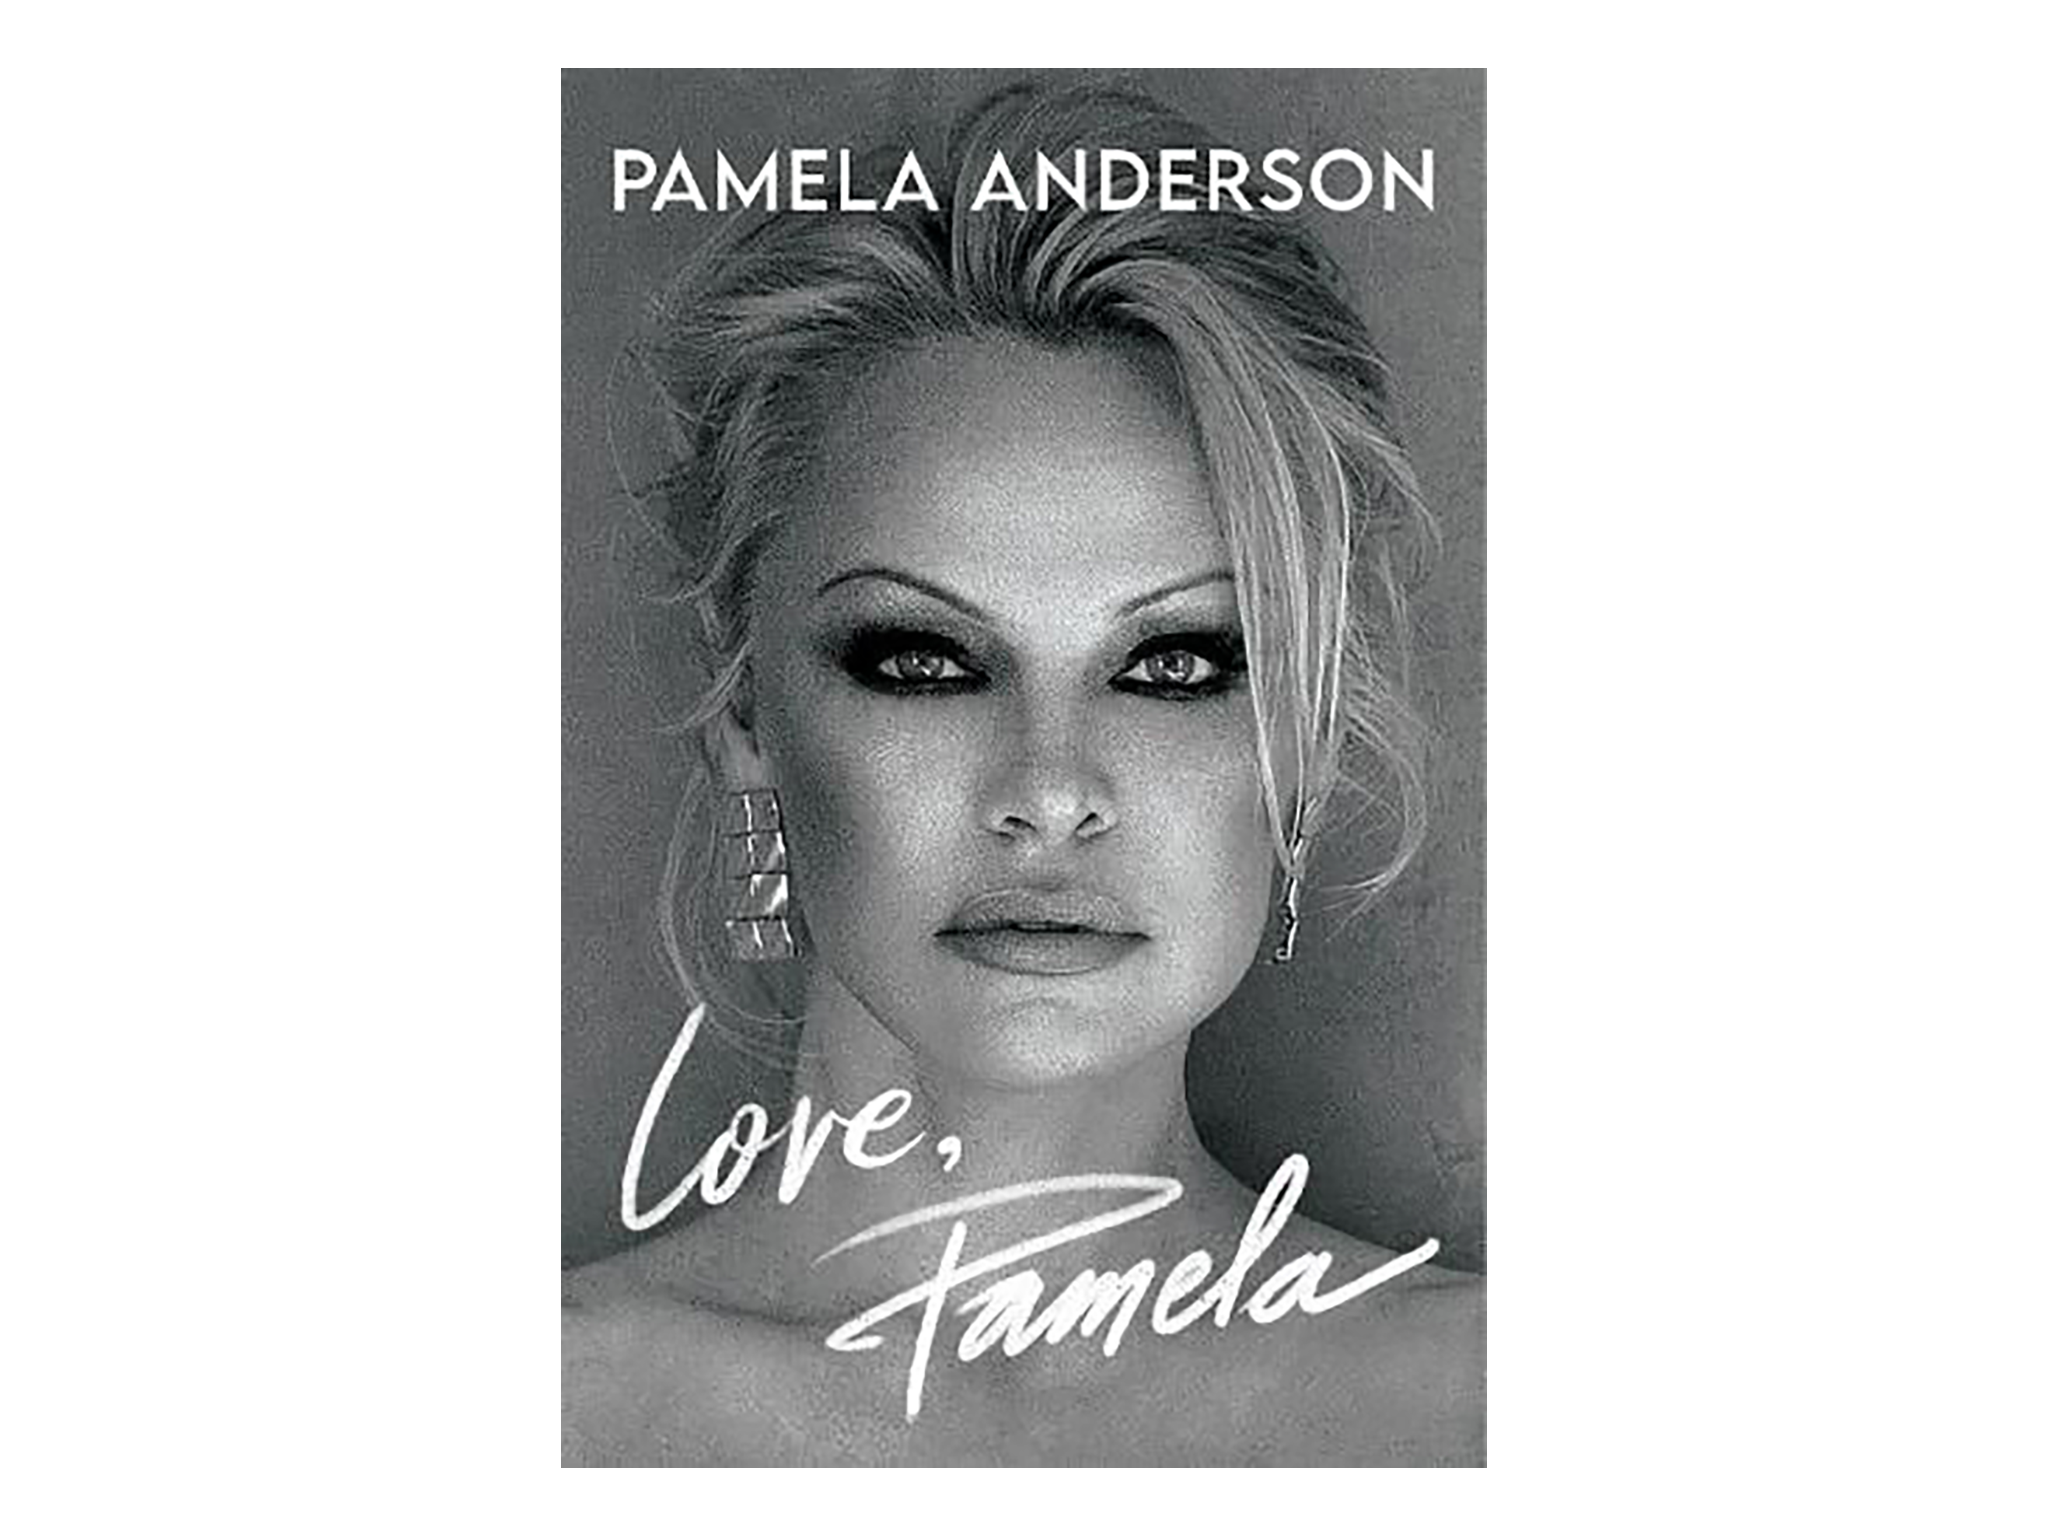 Love, Pamela by Pamela Anderson, published by Headline.png